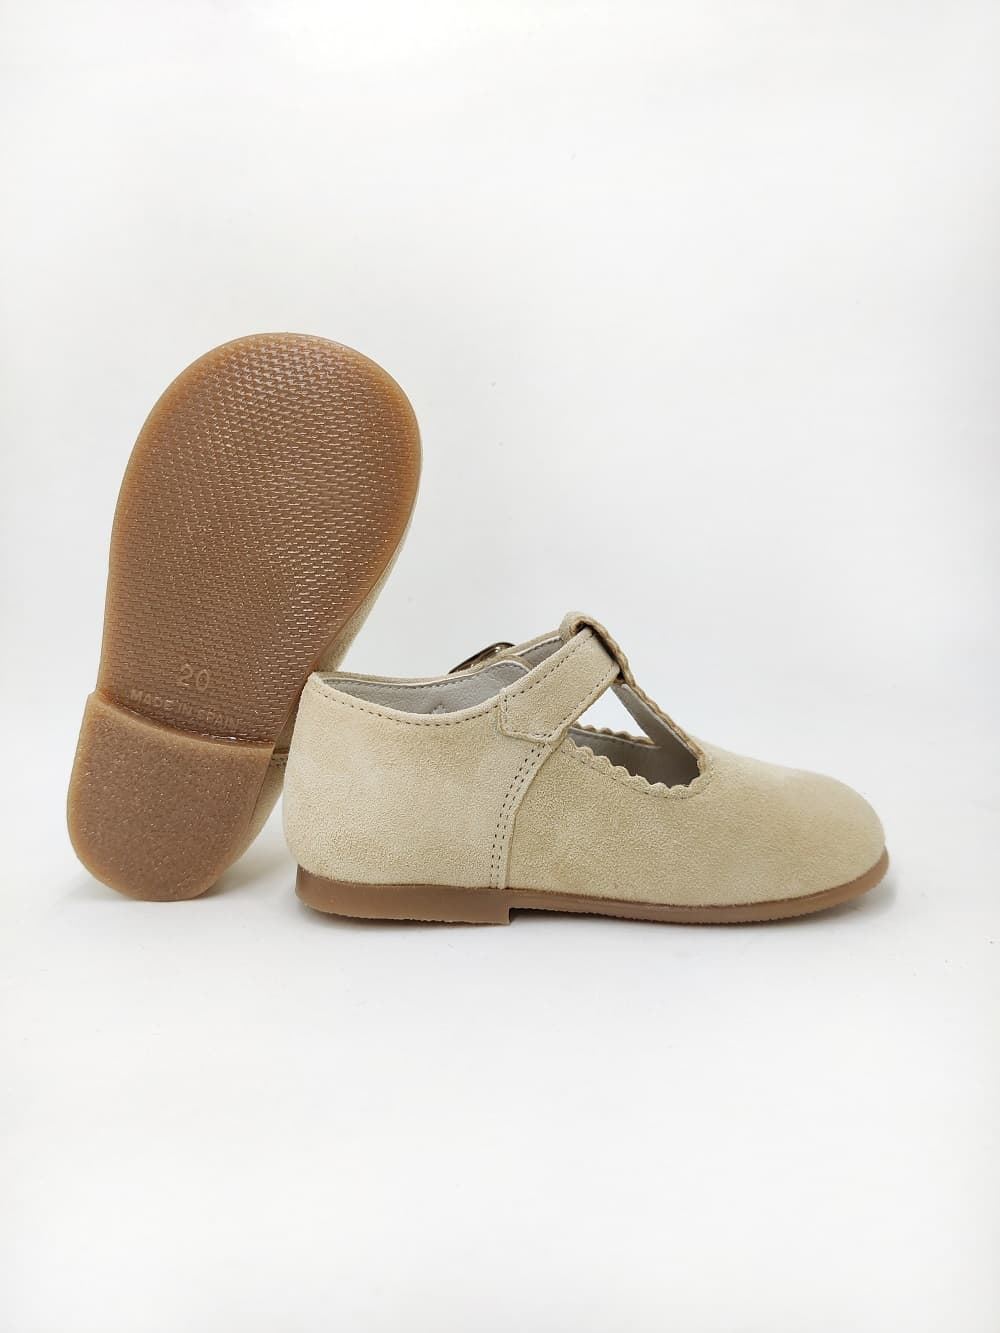 Pirufin (Piruflex) zapato Pepito para bebé Ante Camel - Imagen 4